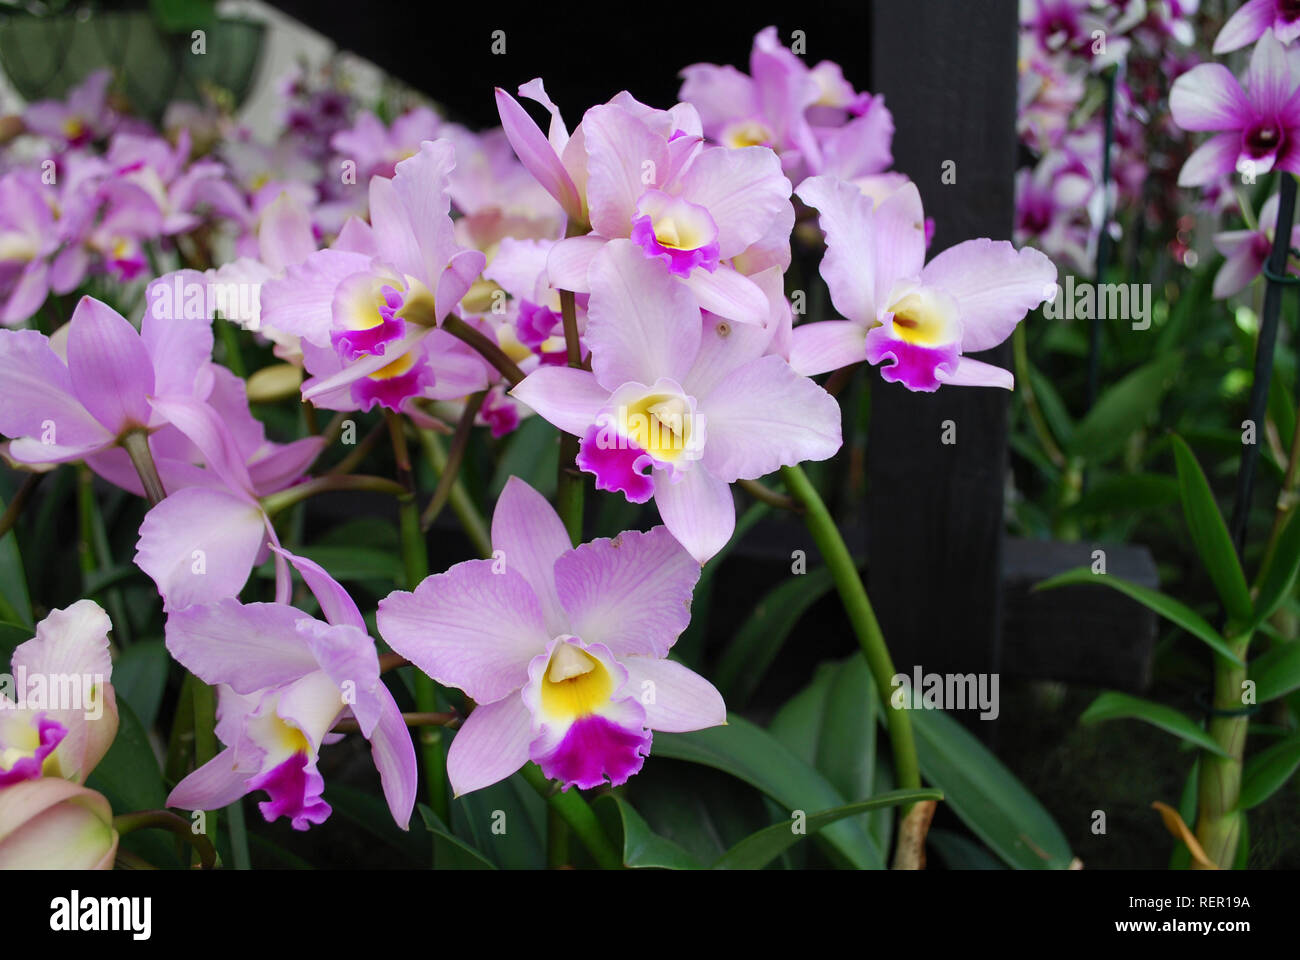 Cattleya loddigesii Occhids flowers. Decorative plants for gardening and greenhouse. Stock Photo